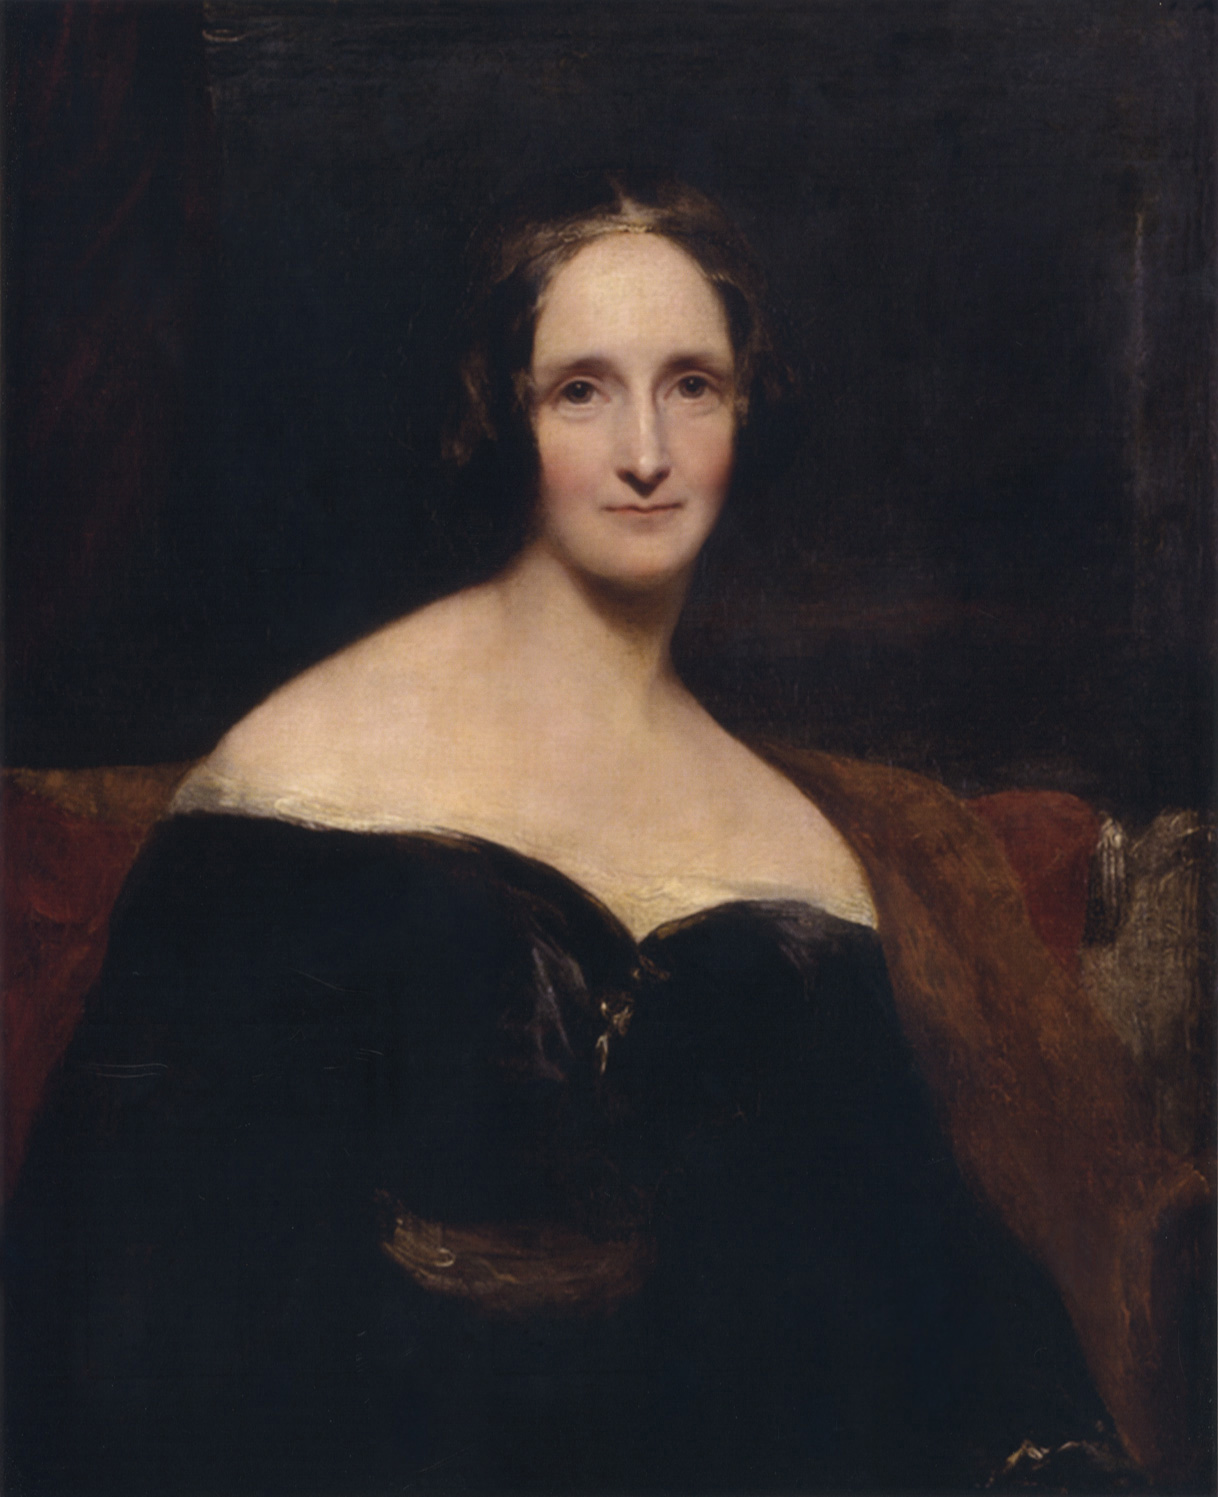 Mary Shelley / Reprodução